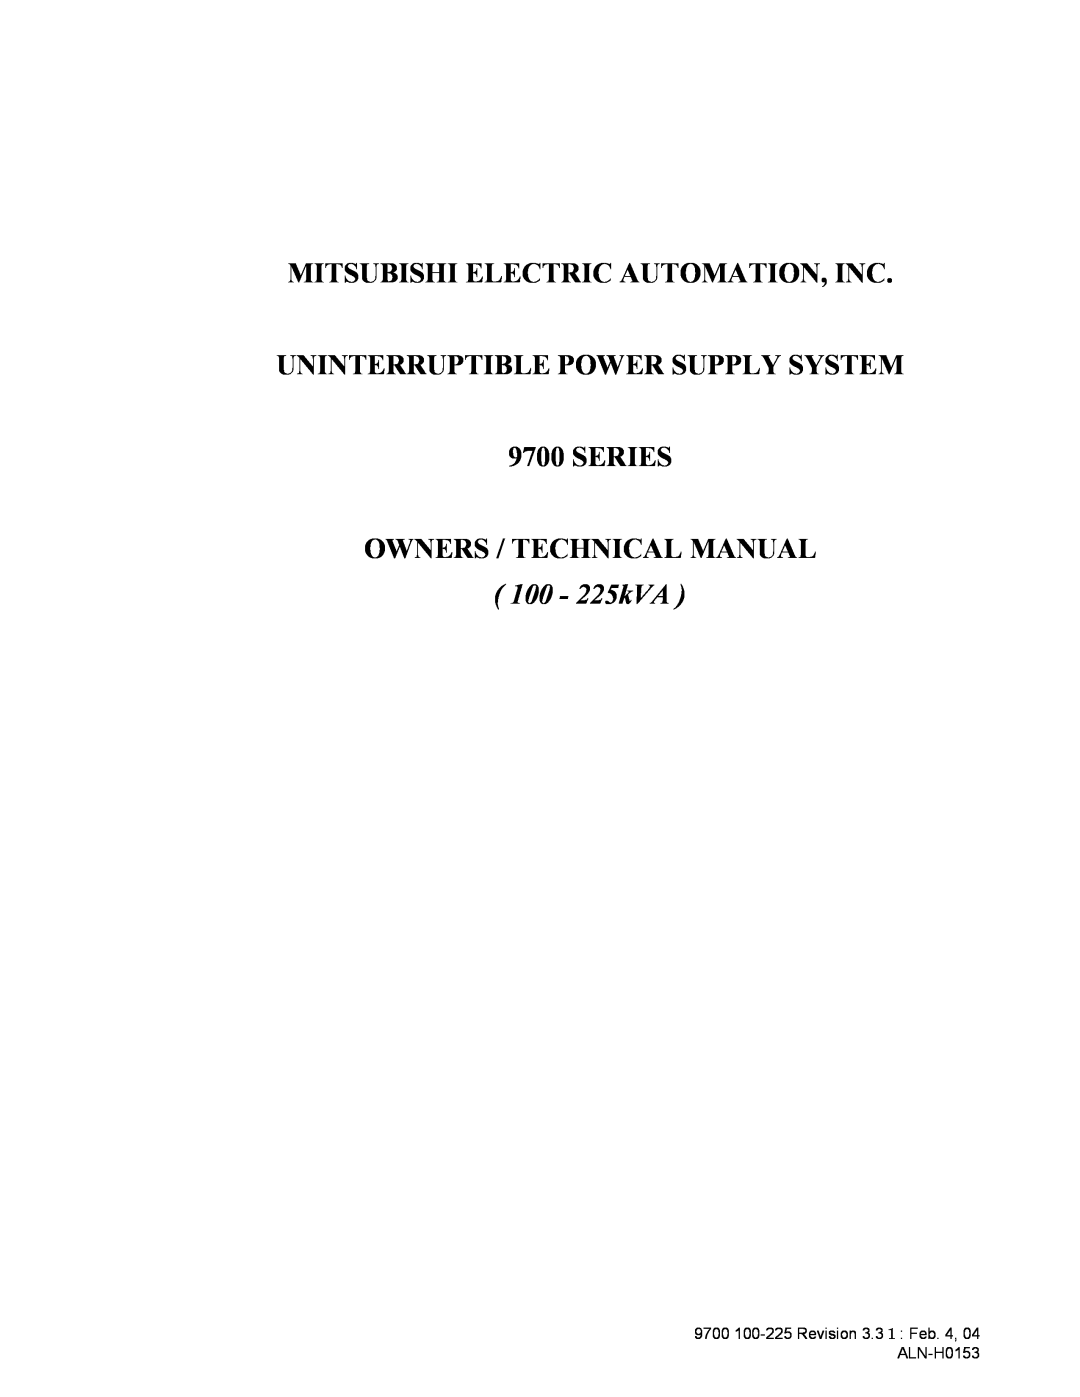 Mitsubishi Electronics 9700 Series technical manual Mitsubishi Electric Automation, Inc, Owners / Technical Manual 